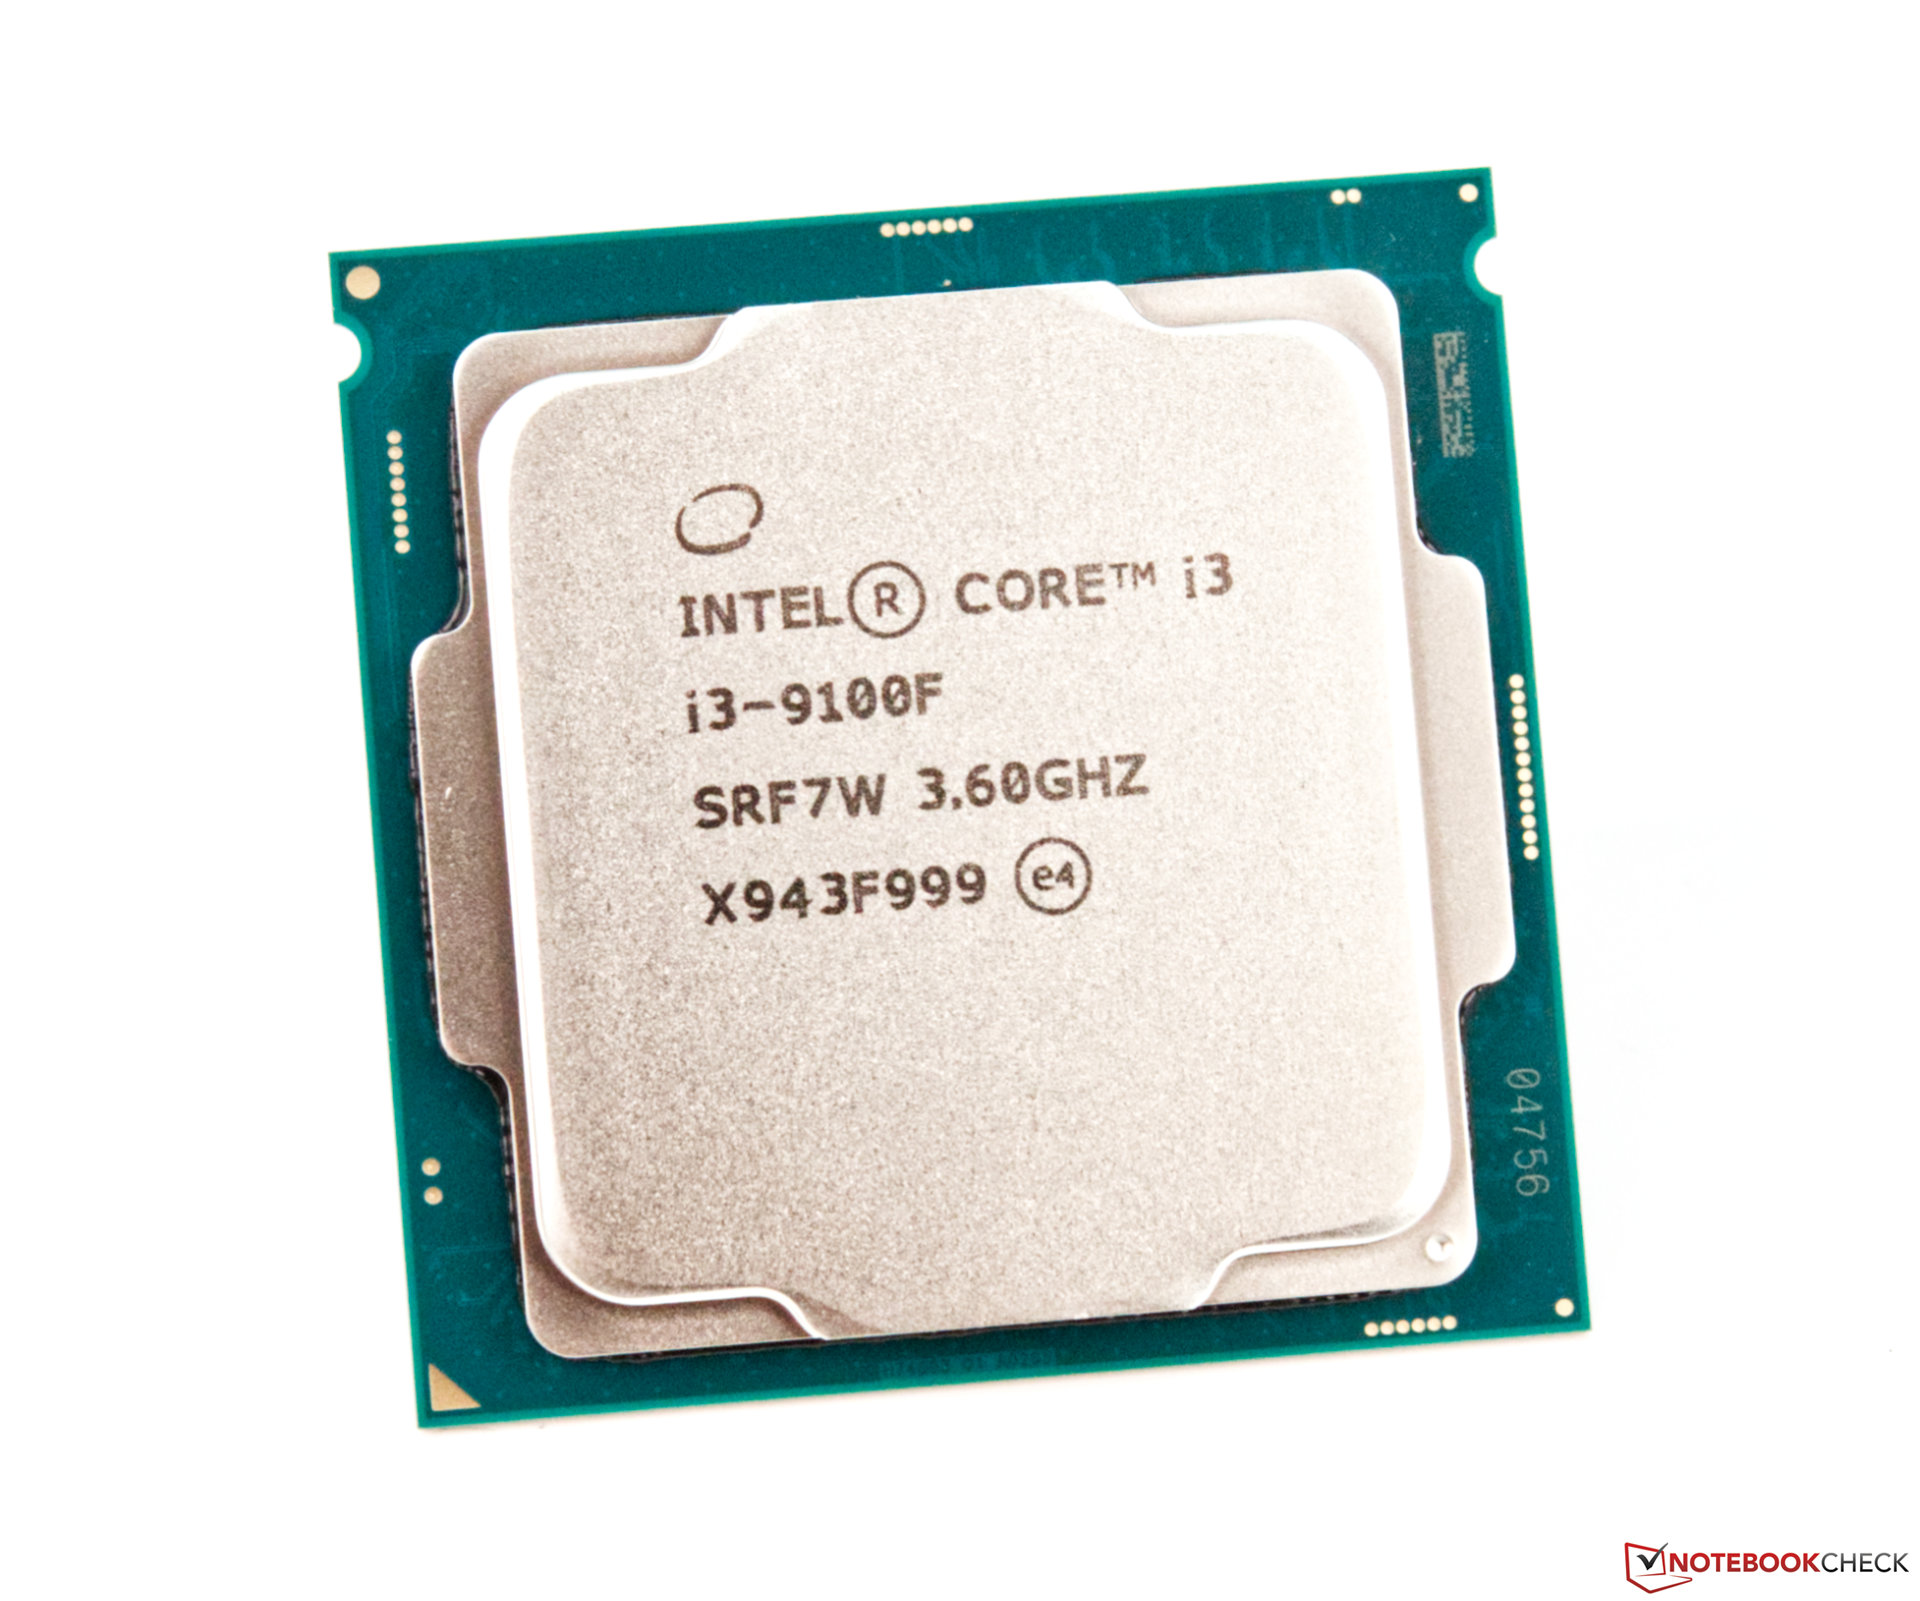 Intel Core i3-9100F Processor - Benchmarks and Specs 